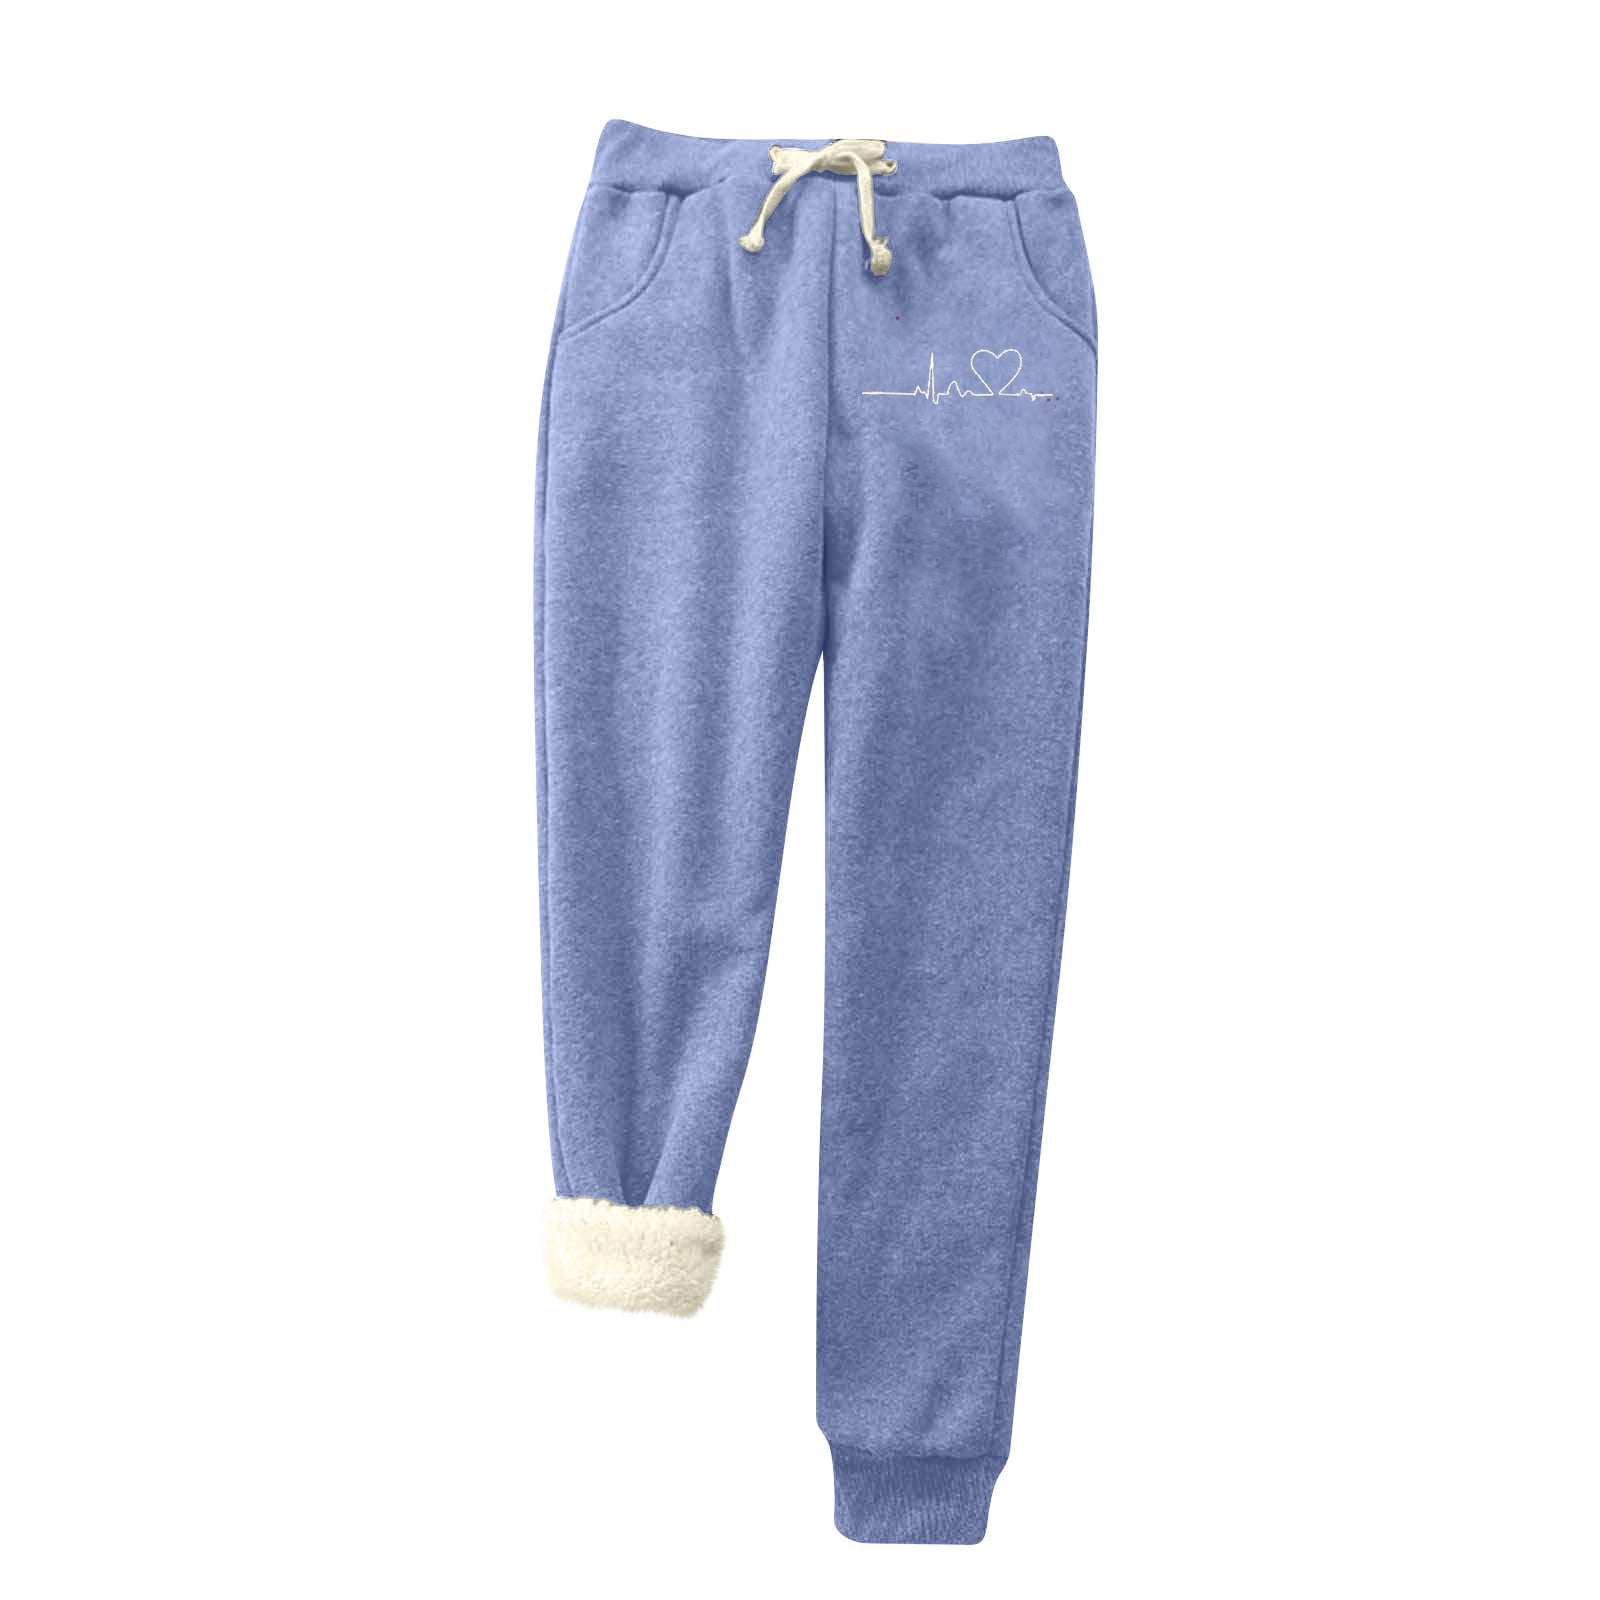 FAIWAD Women's Warm Joggers Fleece Lined Pants Cute Graphic Elastic Waist  Sweatpants with Drawstring (3X-Large, Blue2) 